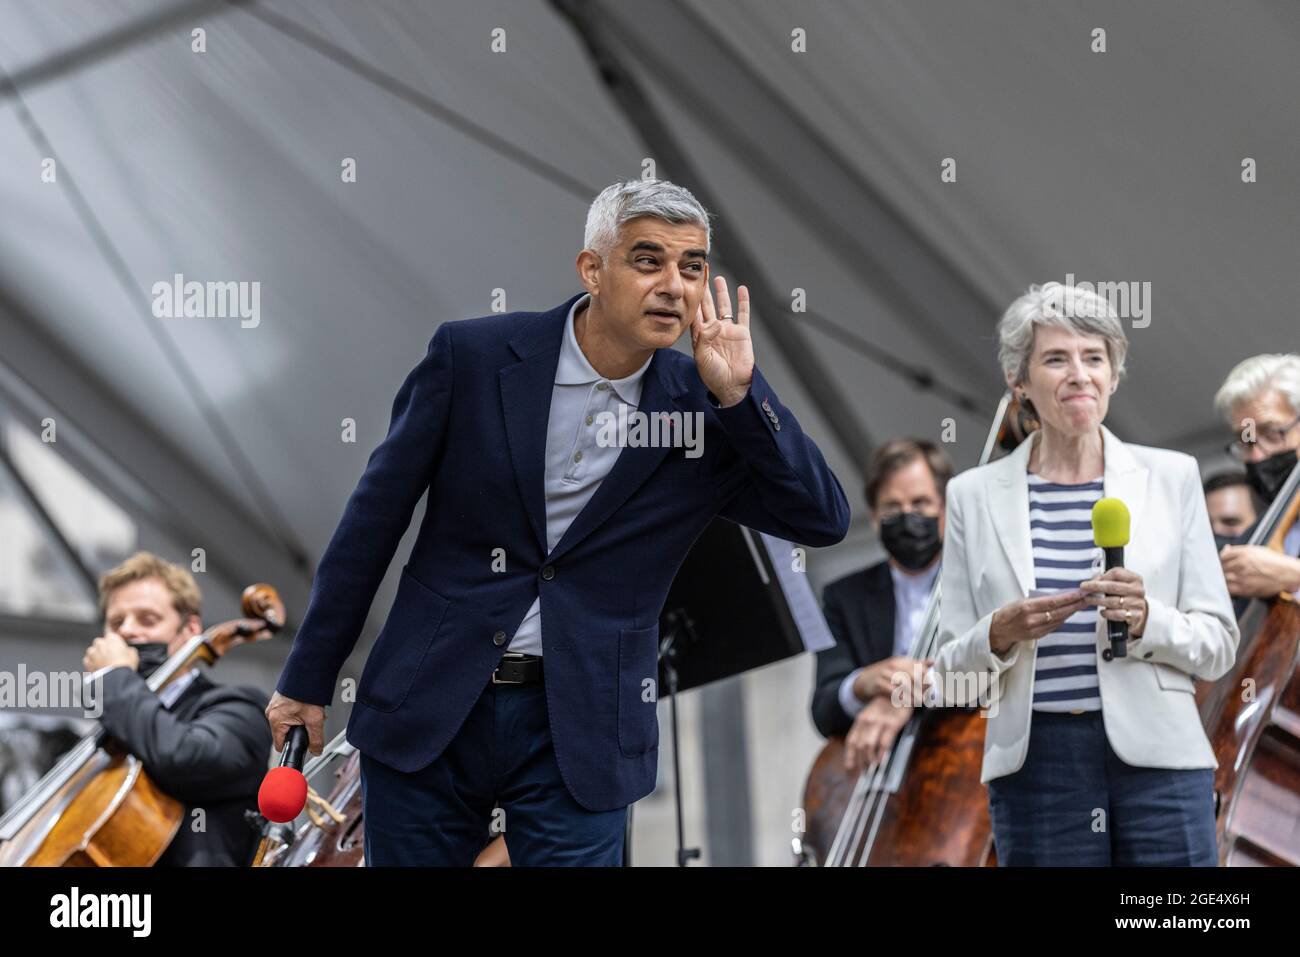 Sadiq Khan, Mayor of London introducing the London Symphony Orchestra - BMW Classics outdoor concert at Trafalgar Square, London, UK Stock Photo